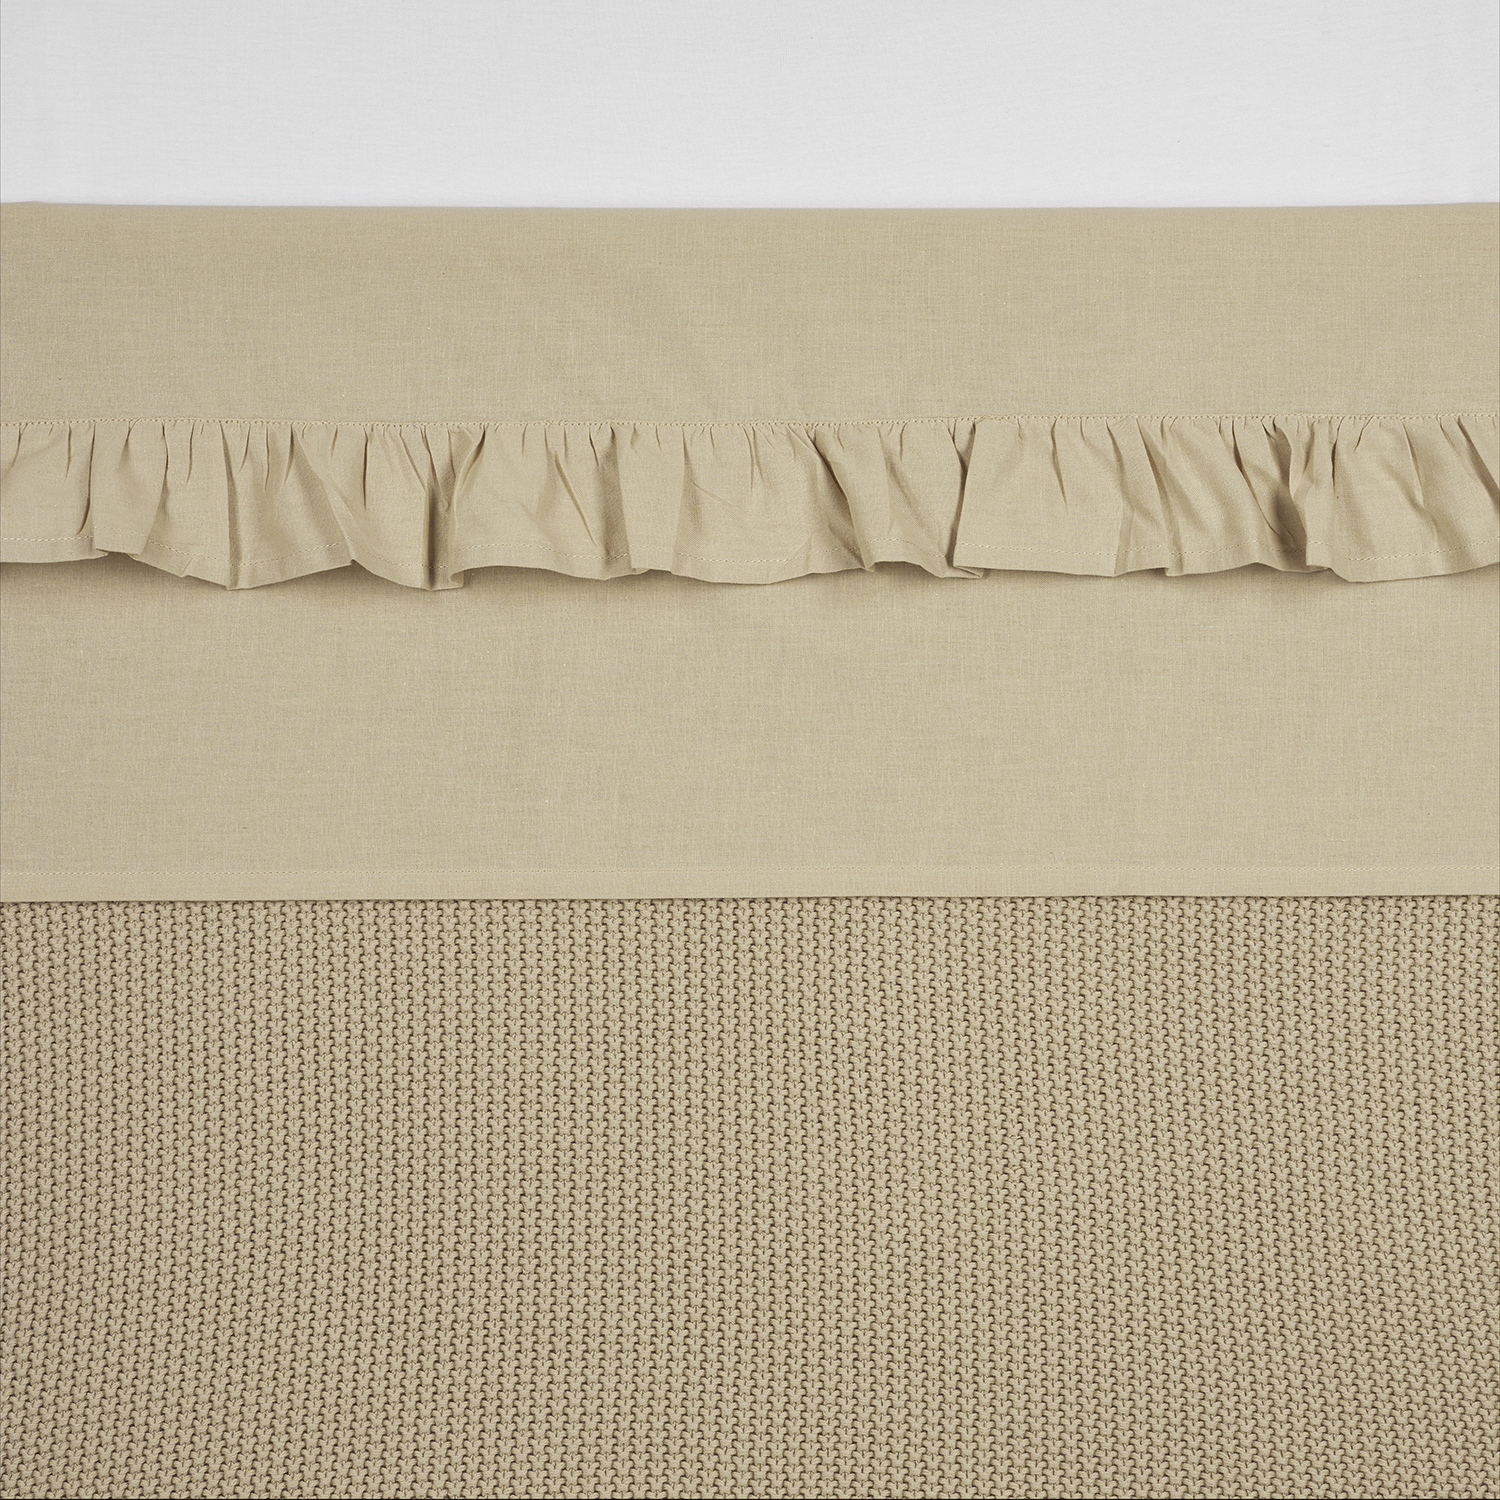 Cot Bed Sheet Ruffle - Sand - 100x150cm